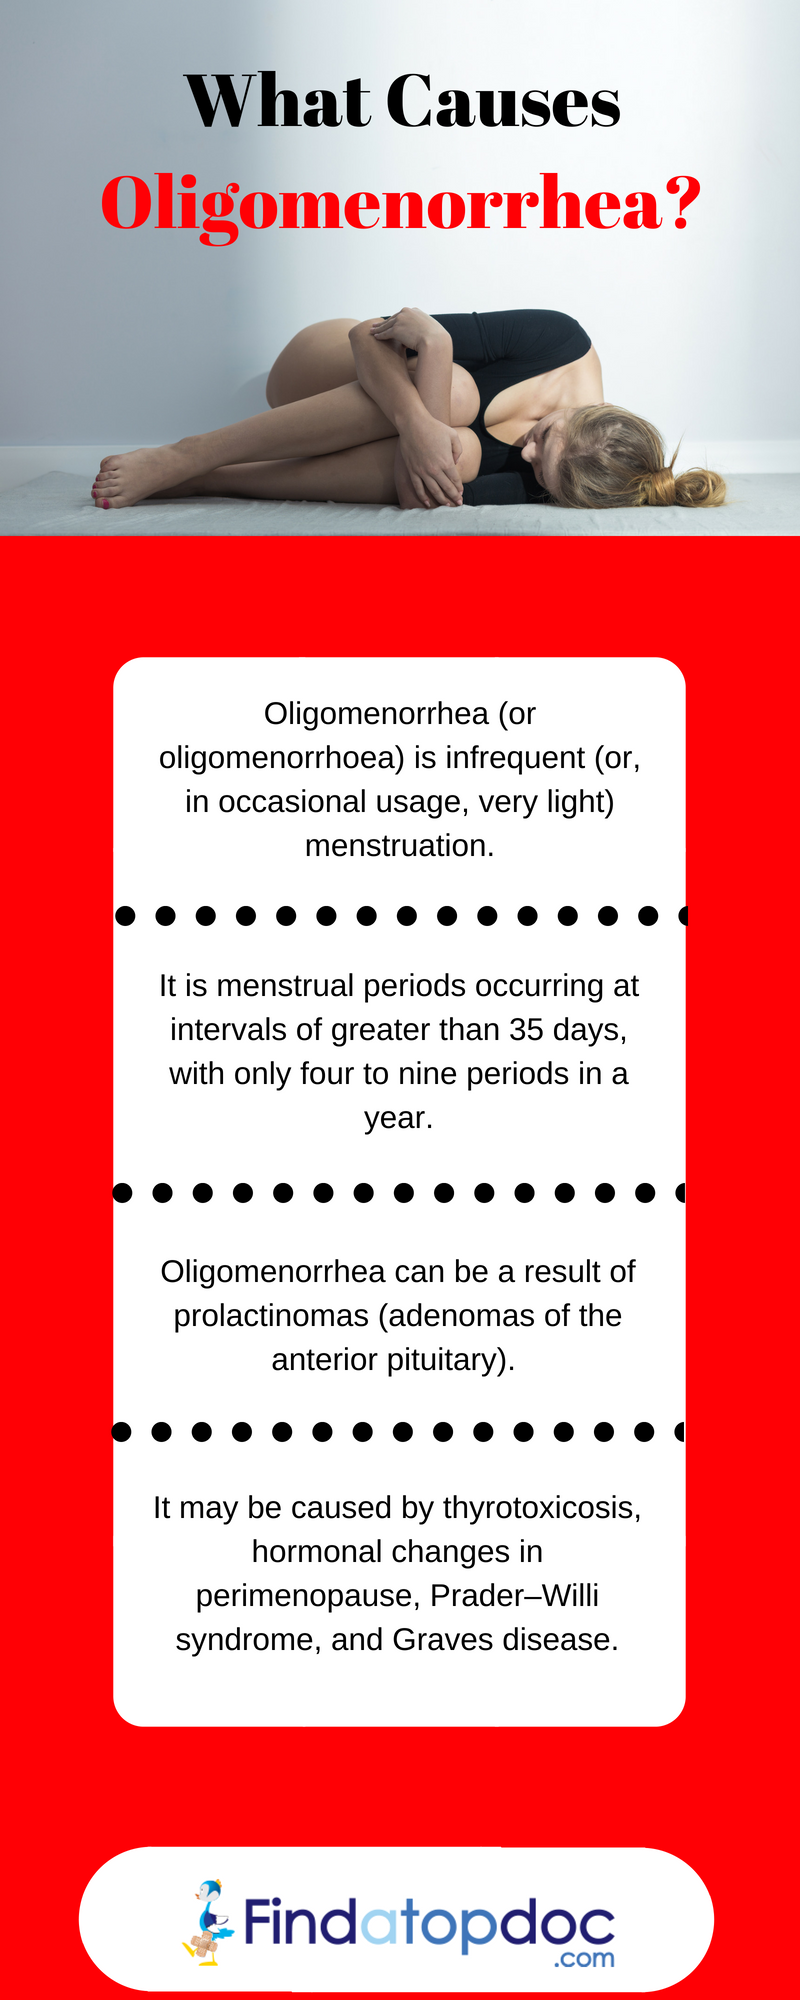 What Causes Oligomenorrhea?